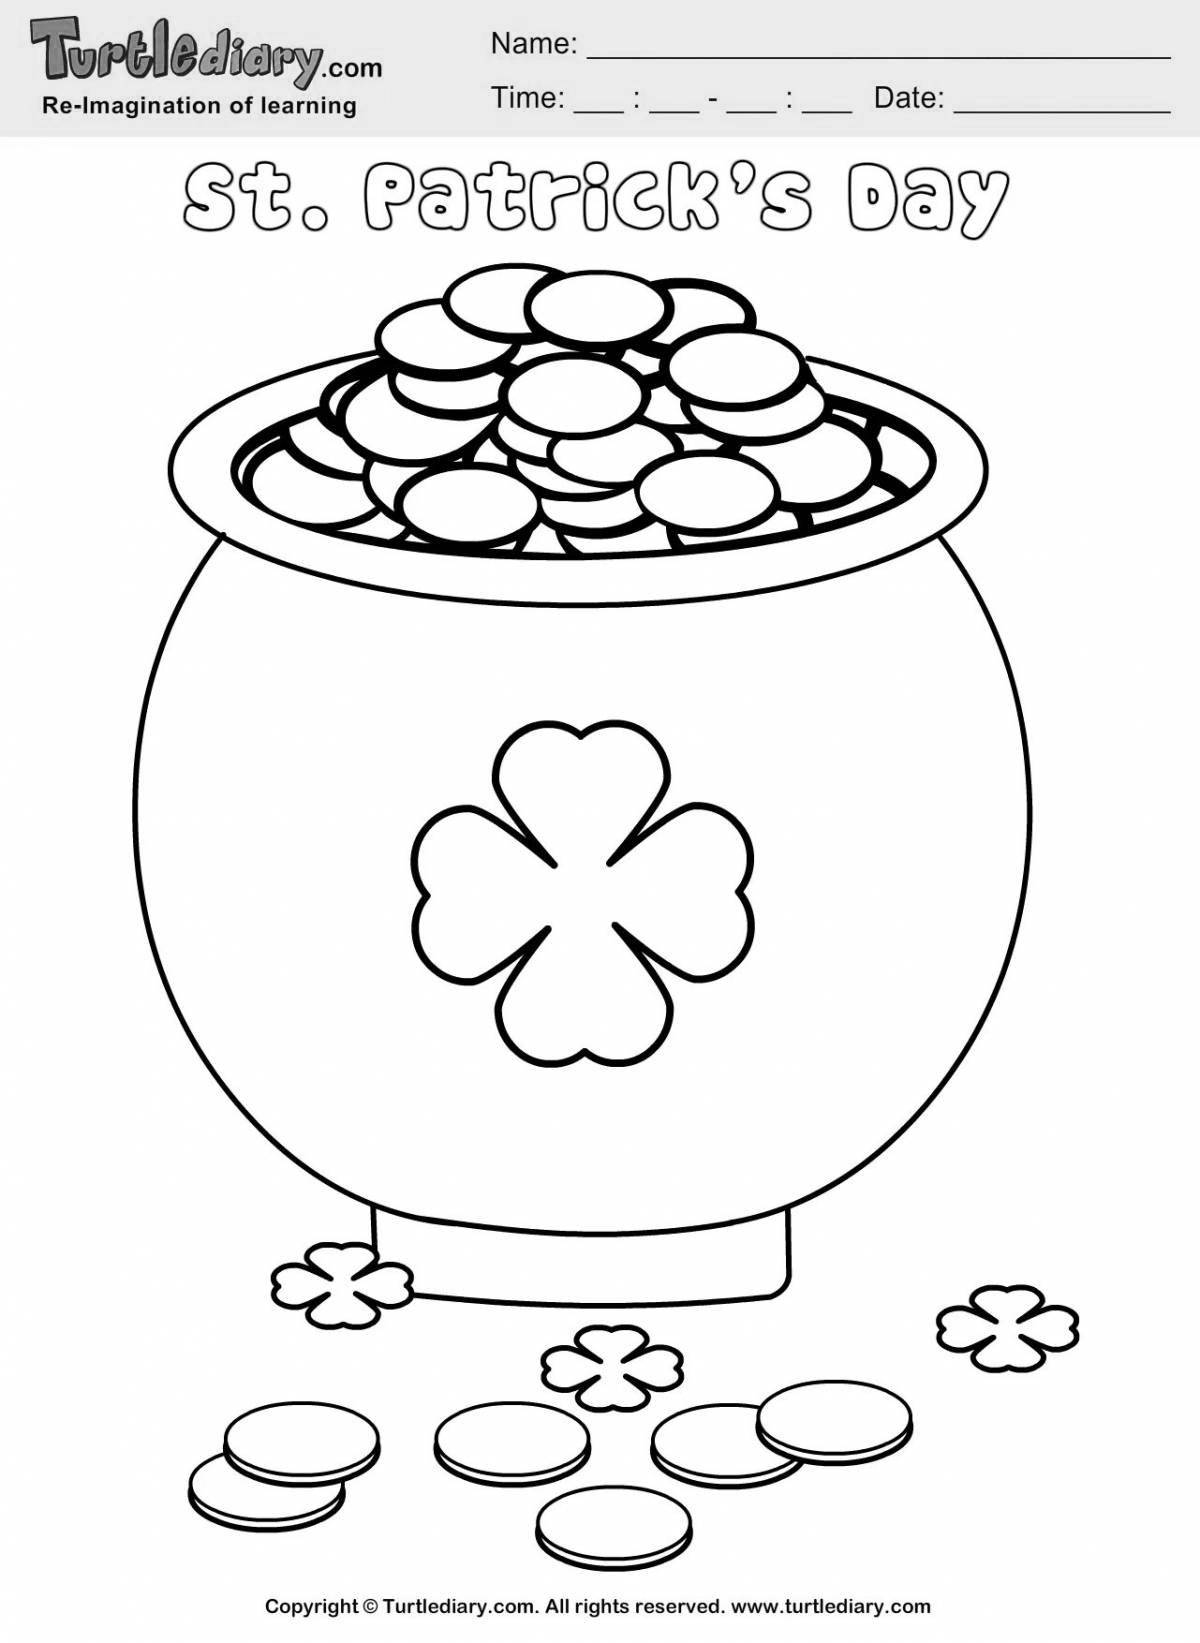 Creative coloring pot